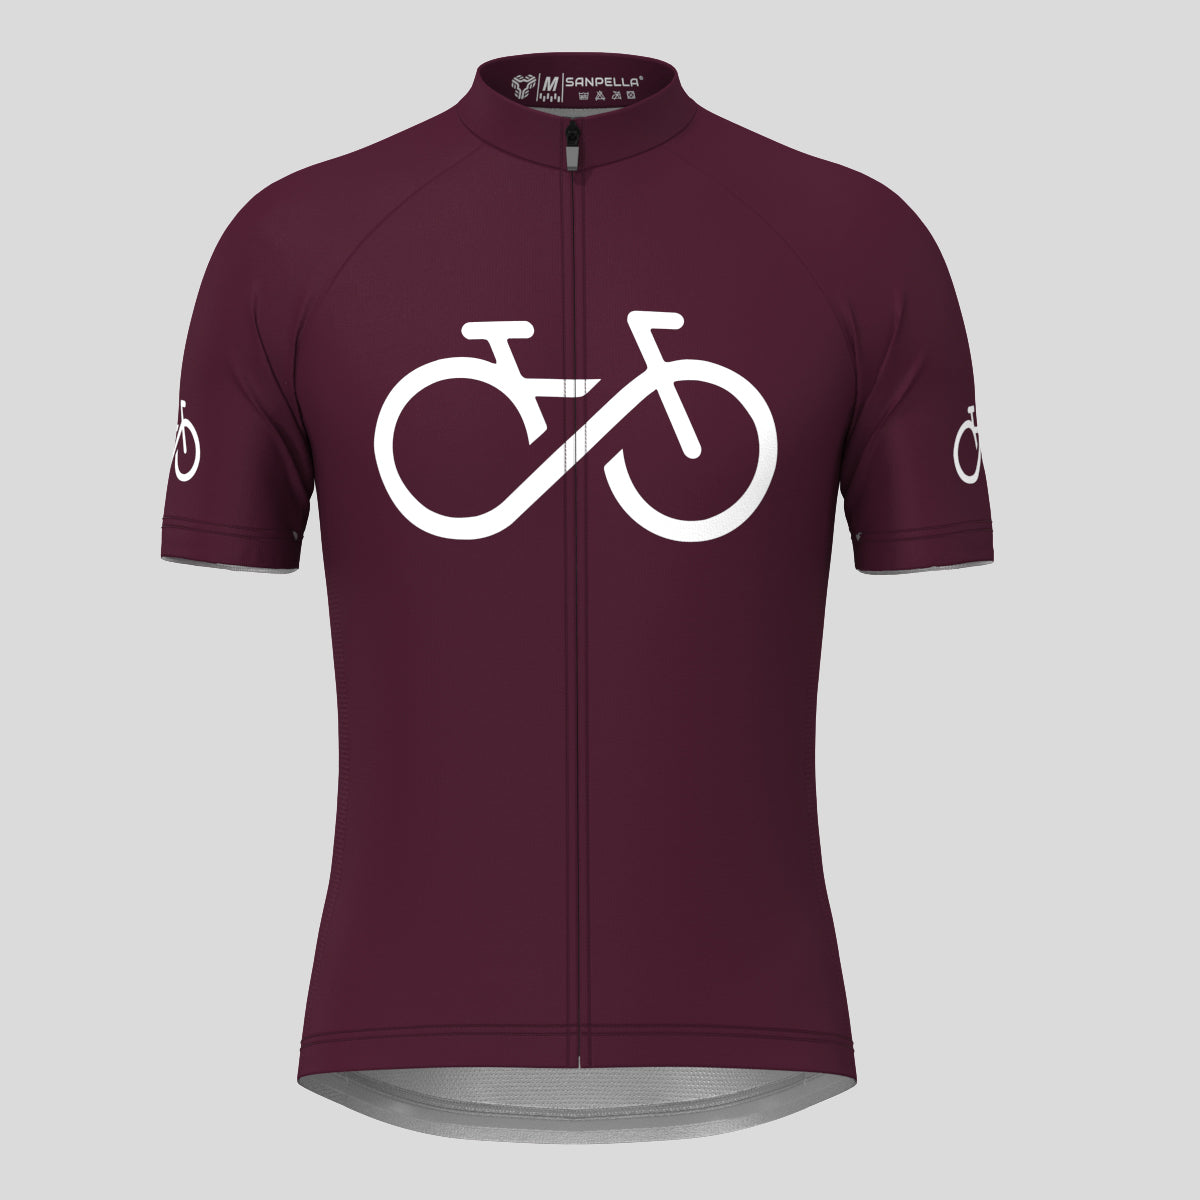 Bike Forever Men's Cycling Jersey - Burgundy